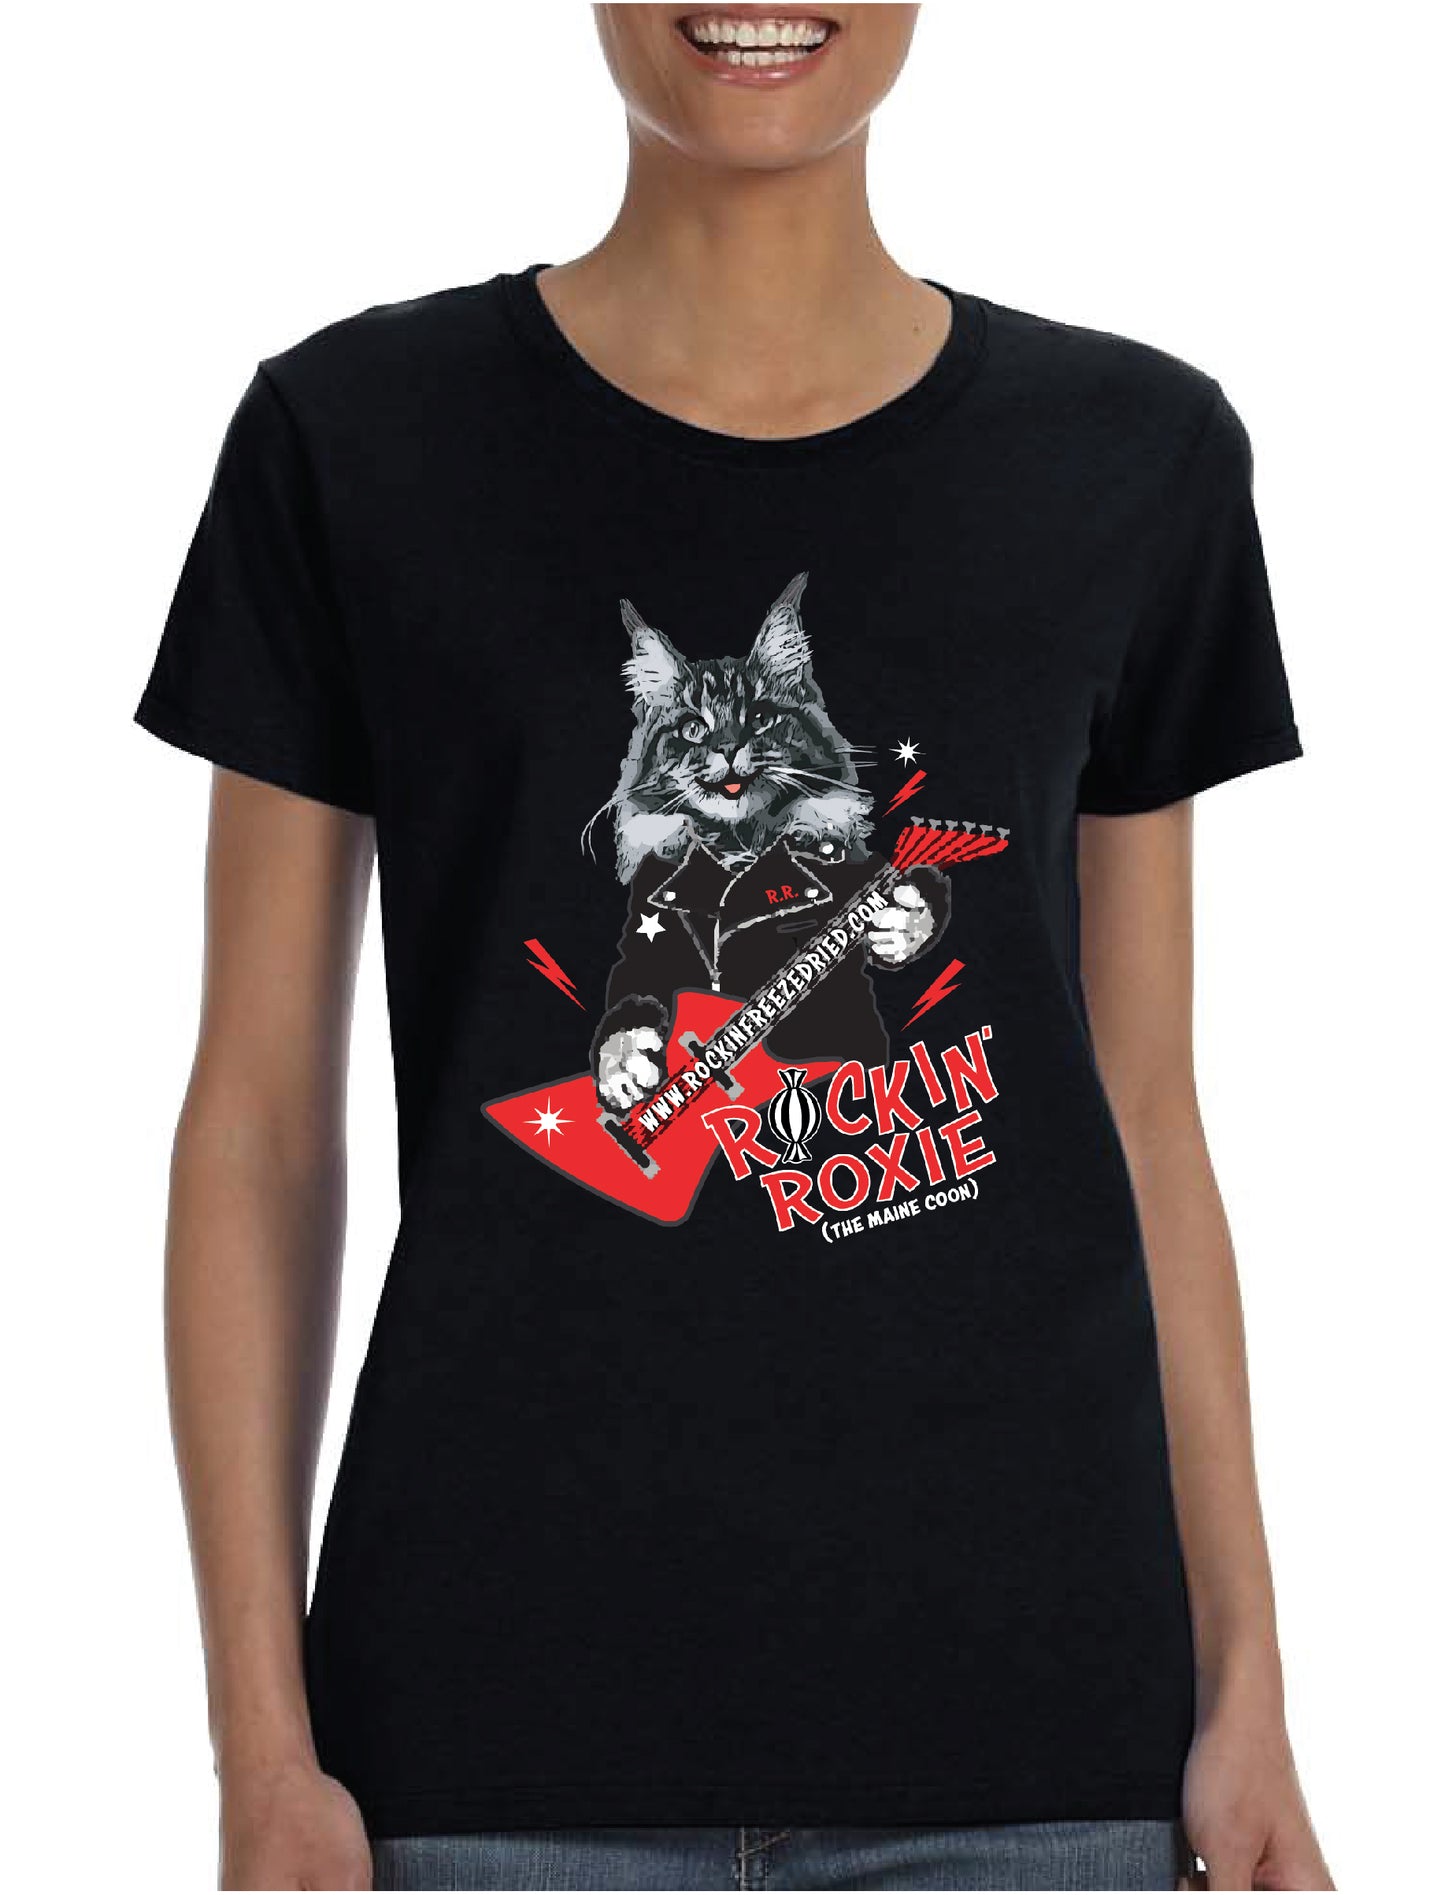 T-Shirt "Rockin' Roxie" Tee (LADIES)